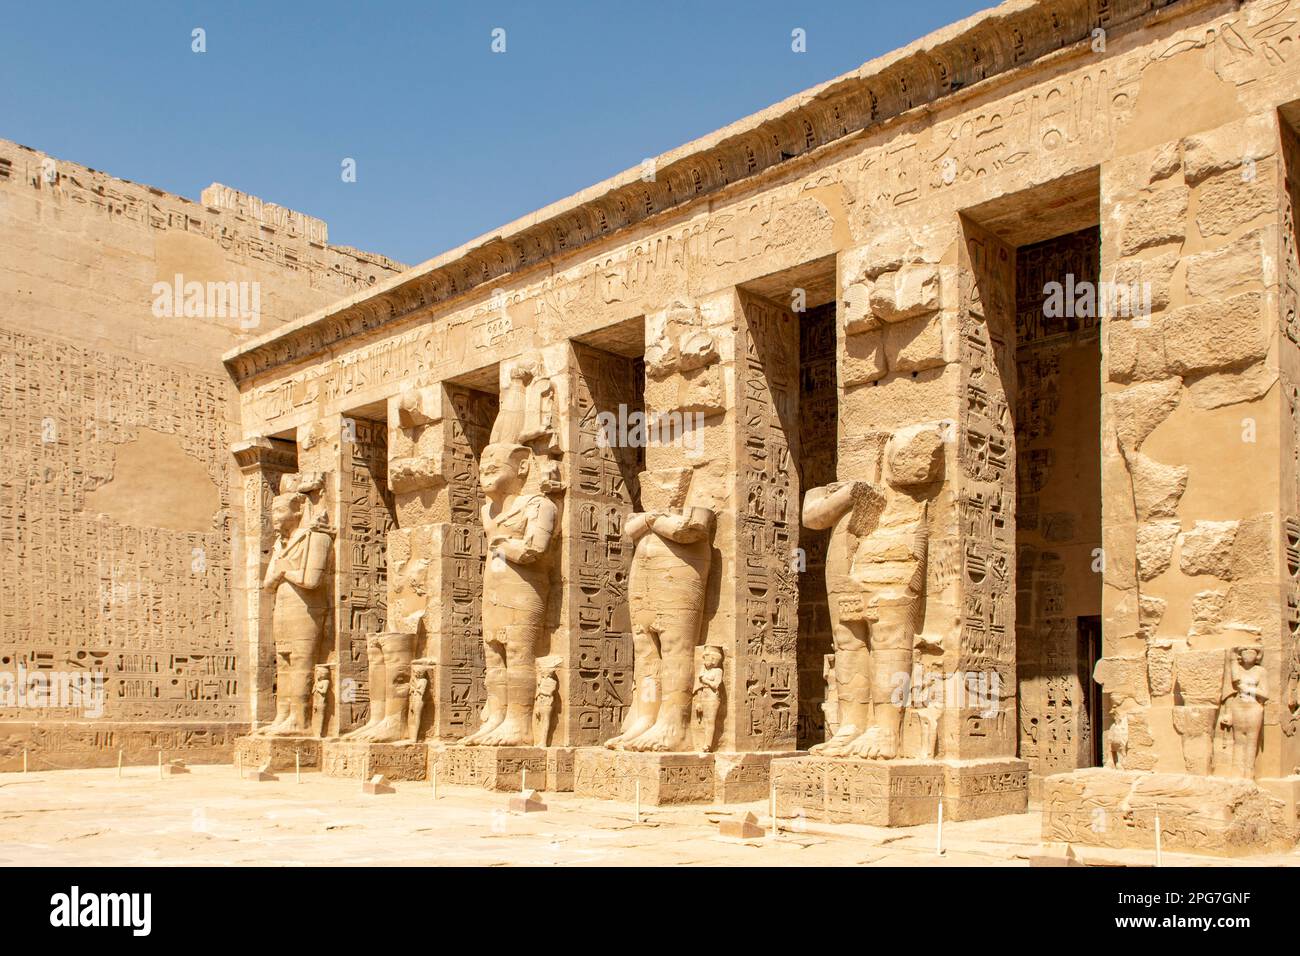 Statues at Mortuary Temple of Amenhotep III, near Luxor, Egypt Stock Photo